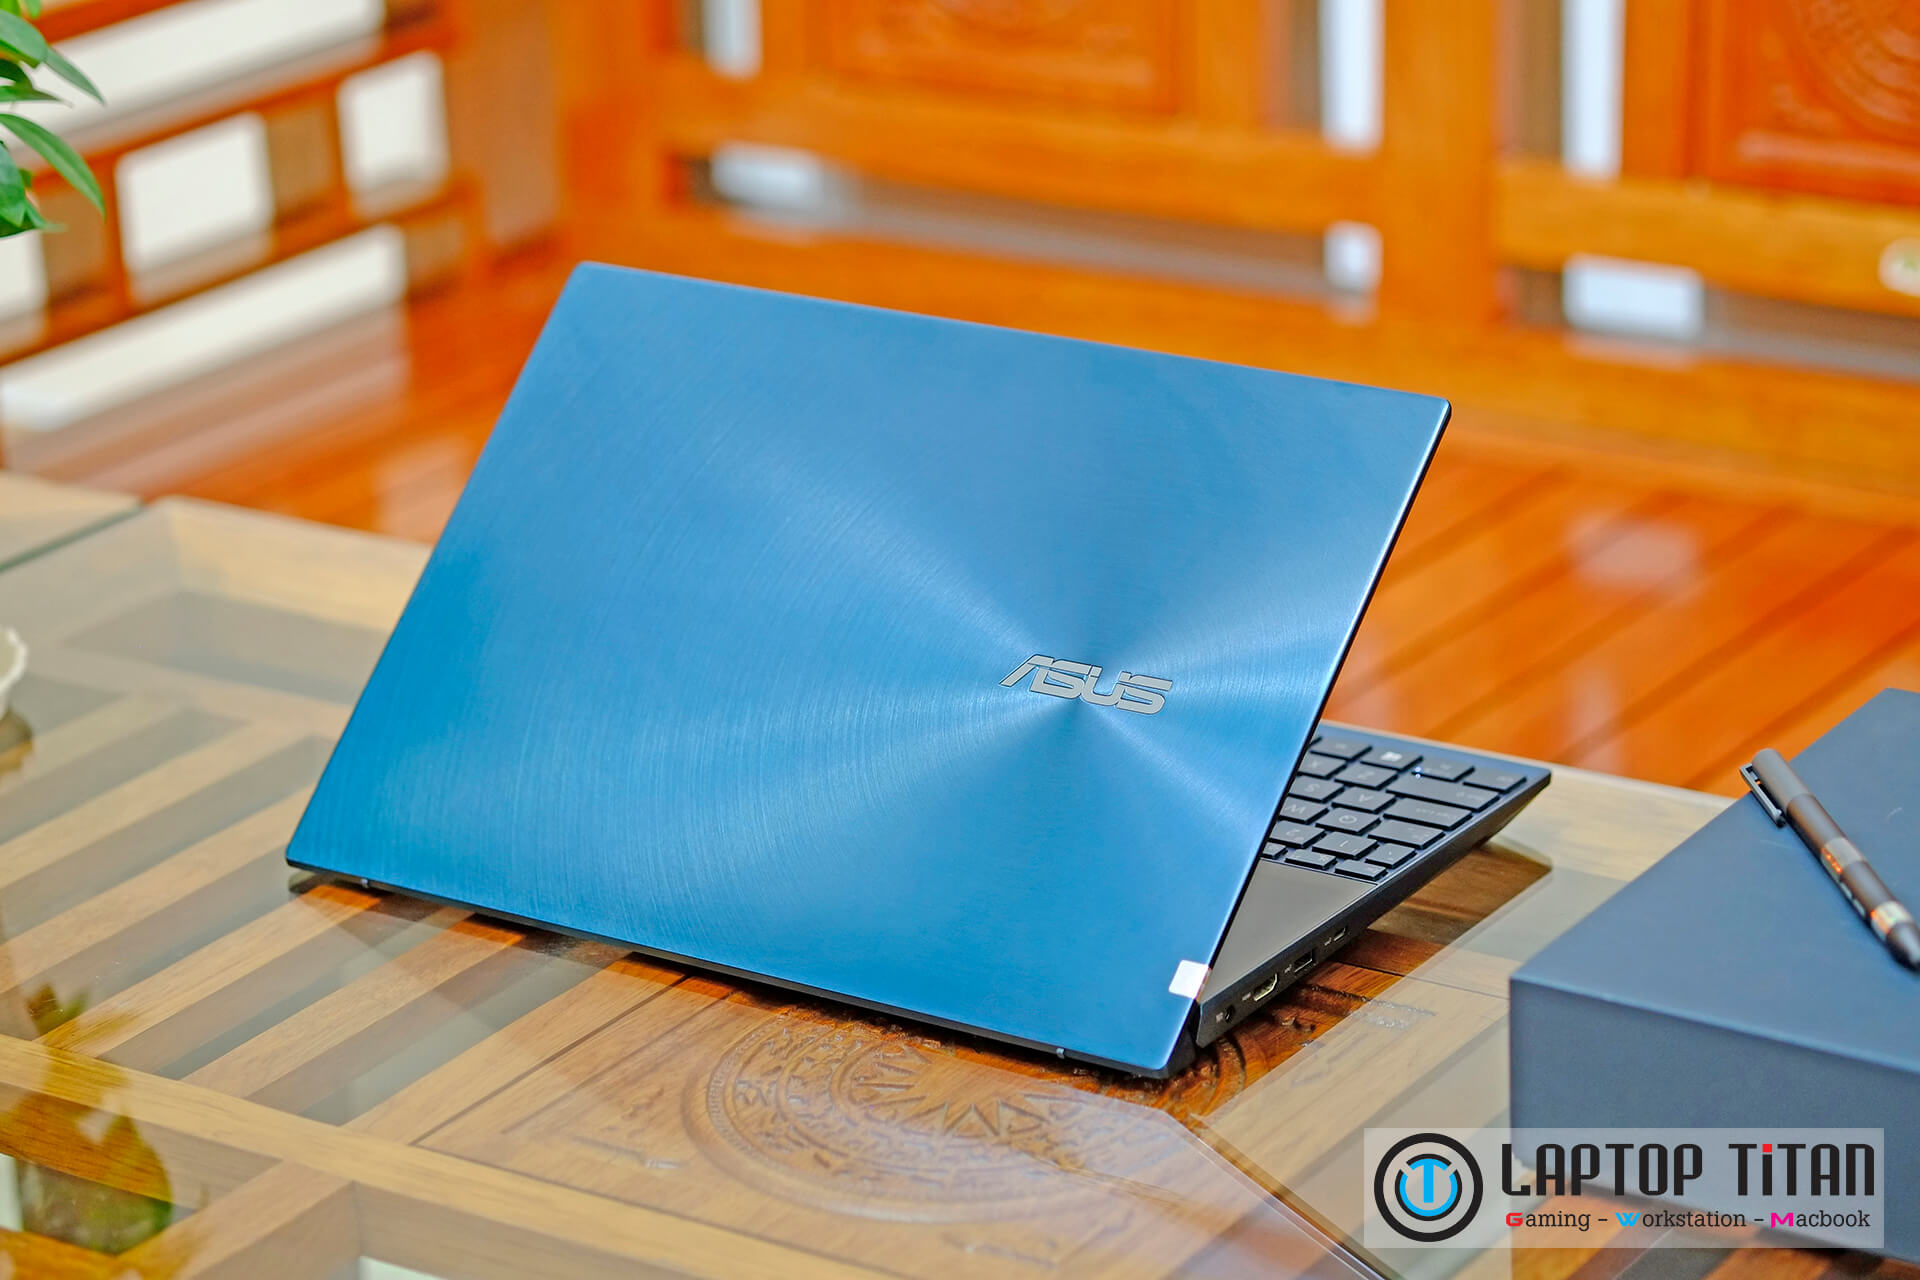 Asus Zenbook Duo Ux481Fl Laptoptitan 08